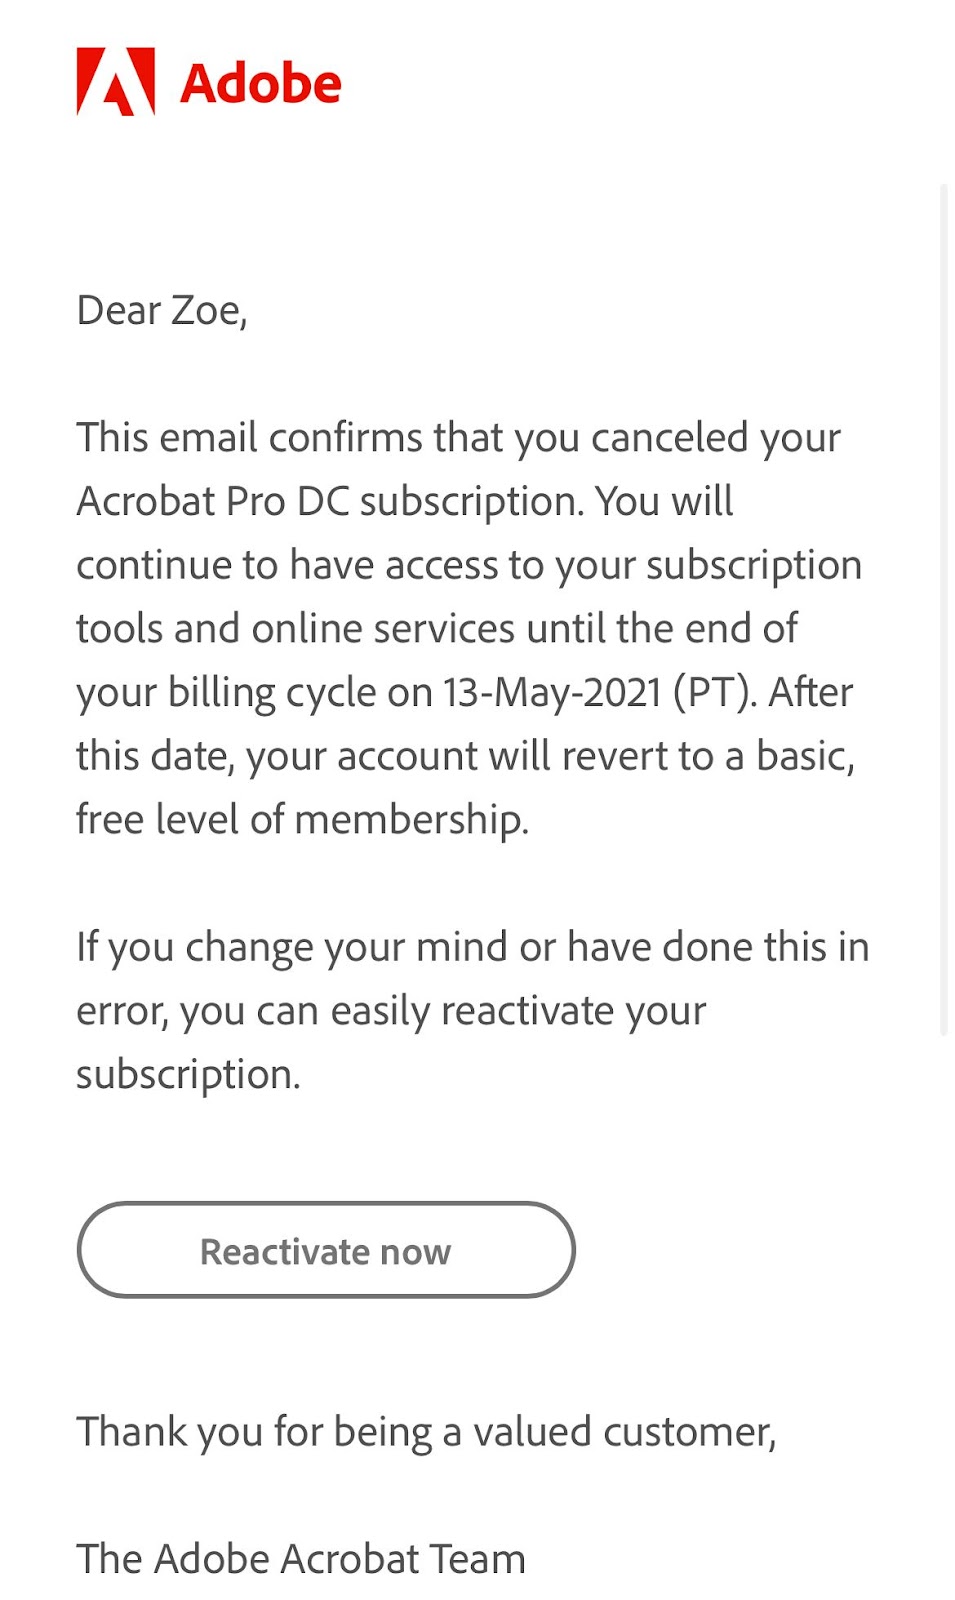 Voorbeeld van annulerings-e-mail voor Adobe Acrobat Pro DC